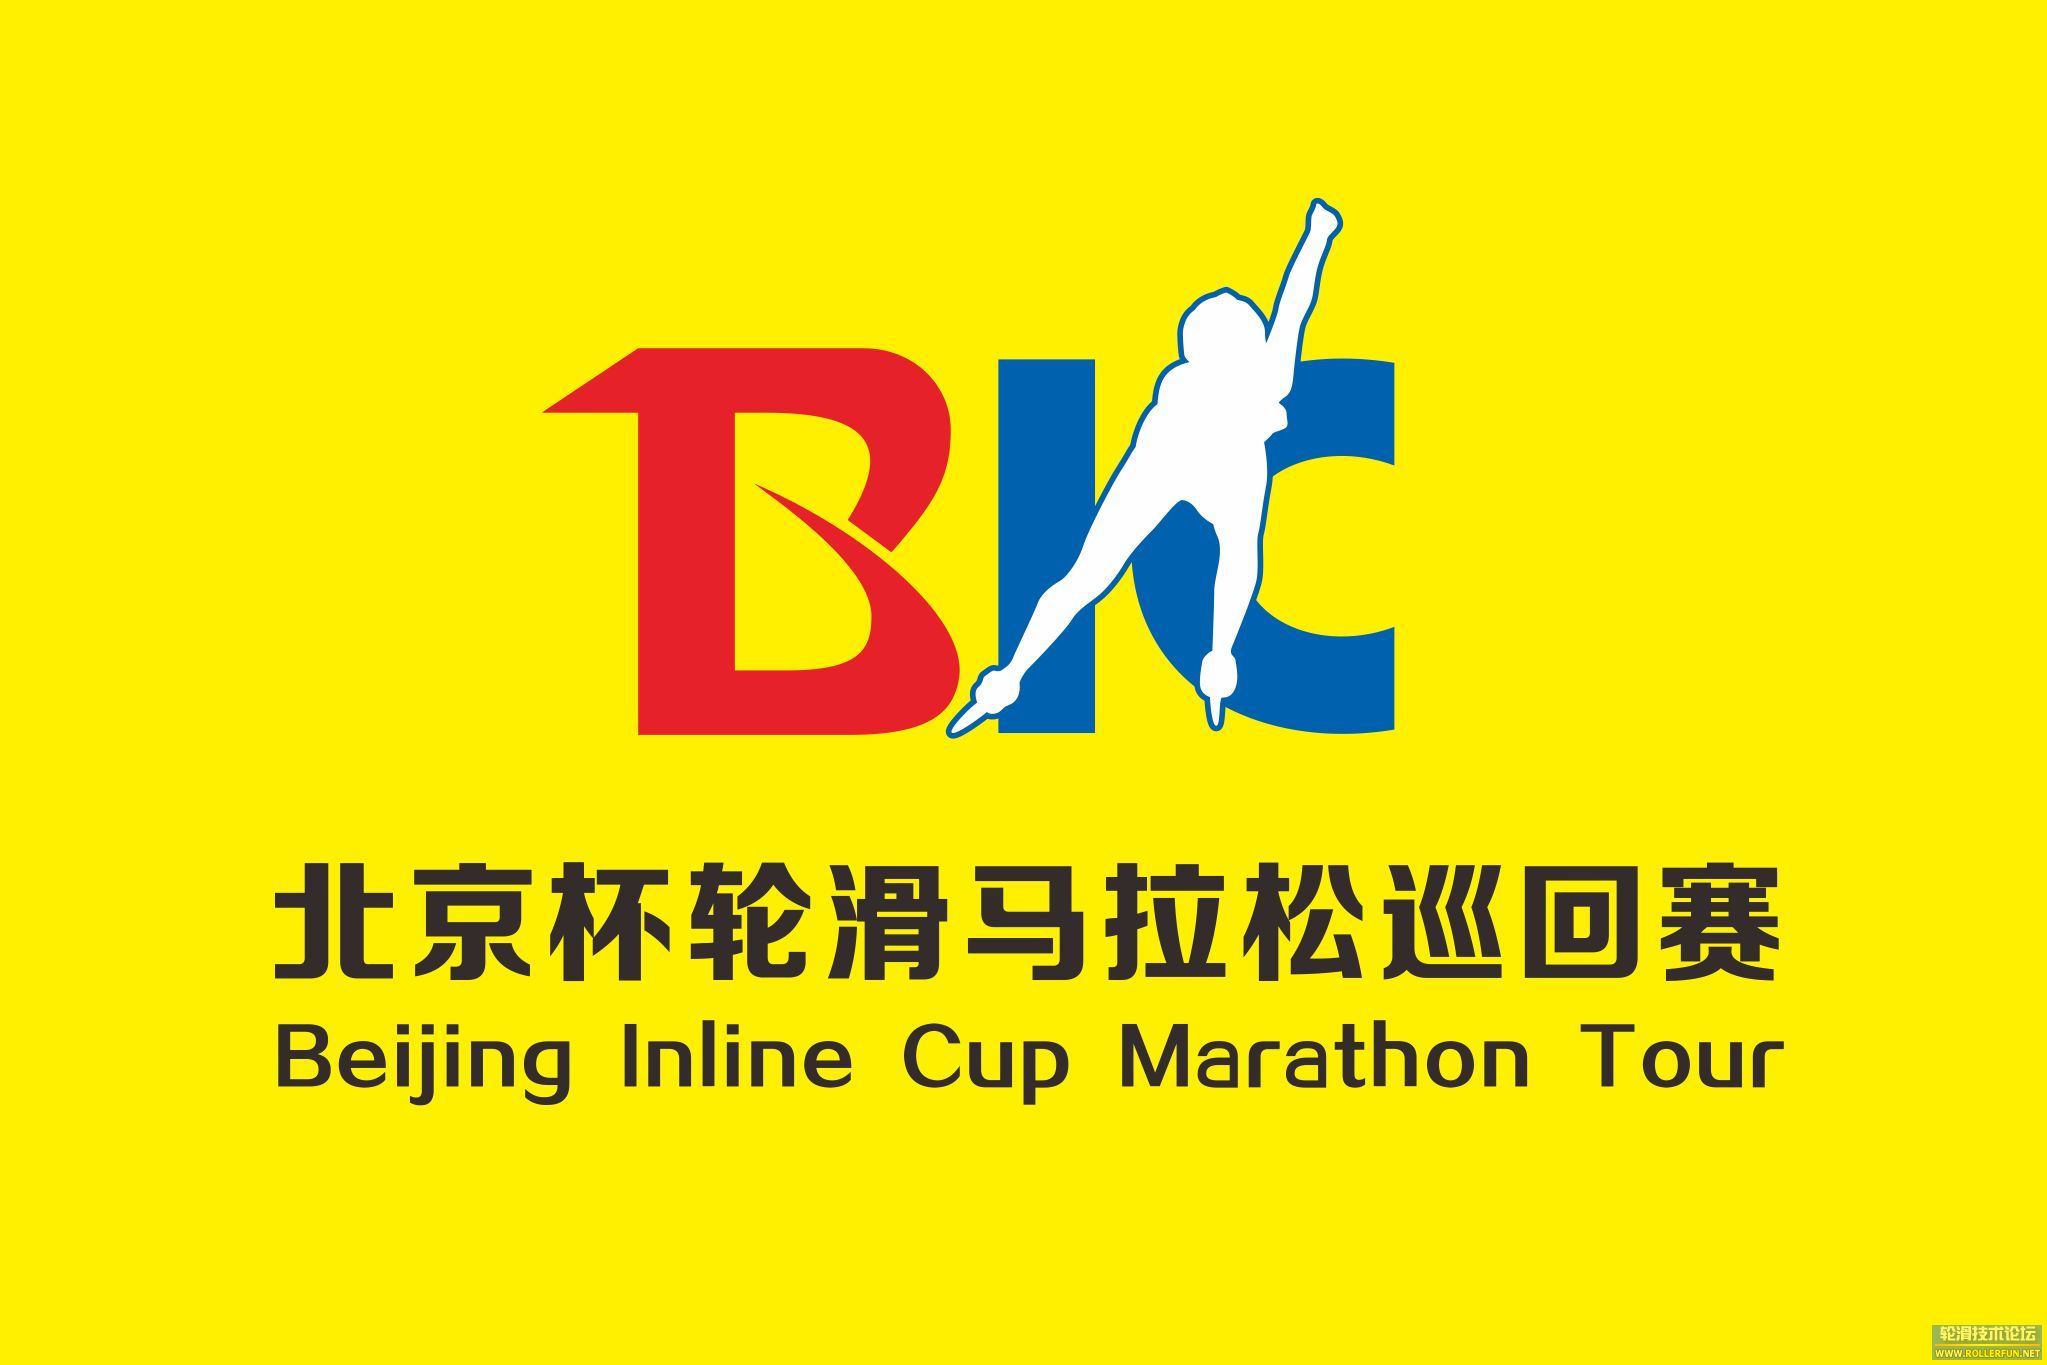 BIC北京杯轮滑马拉松巡回赛旗帜.jpg